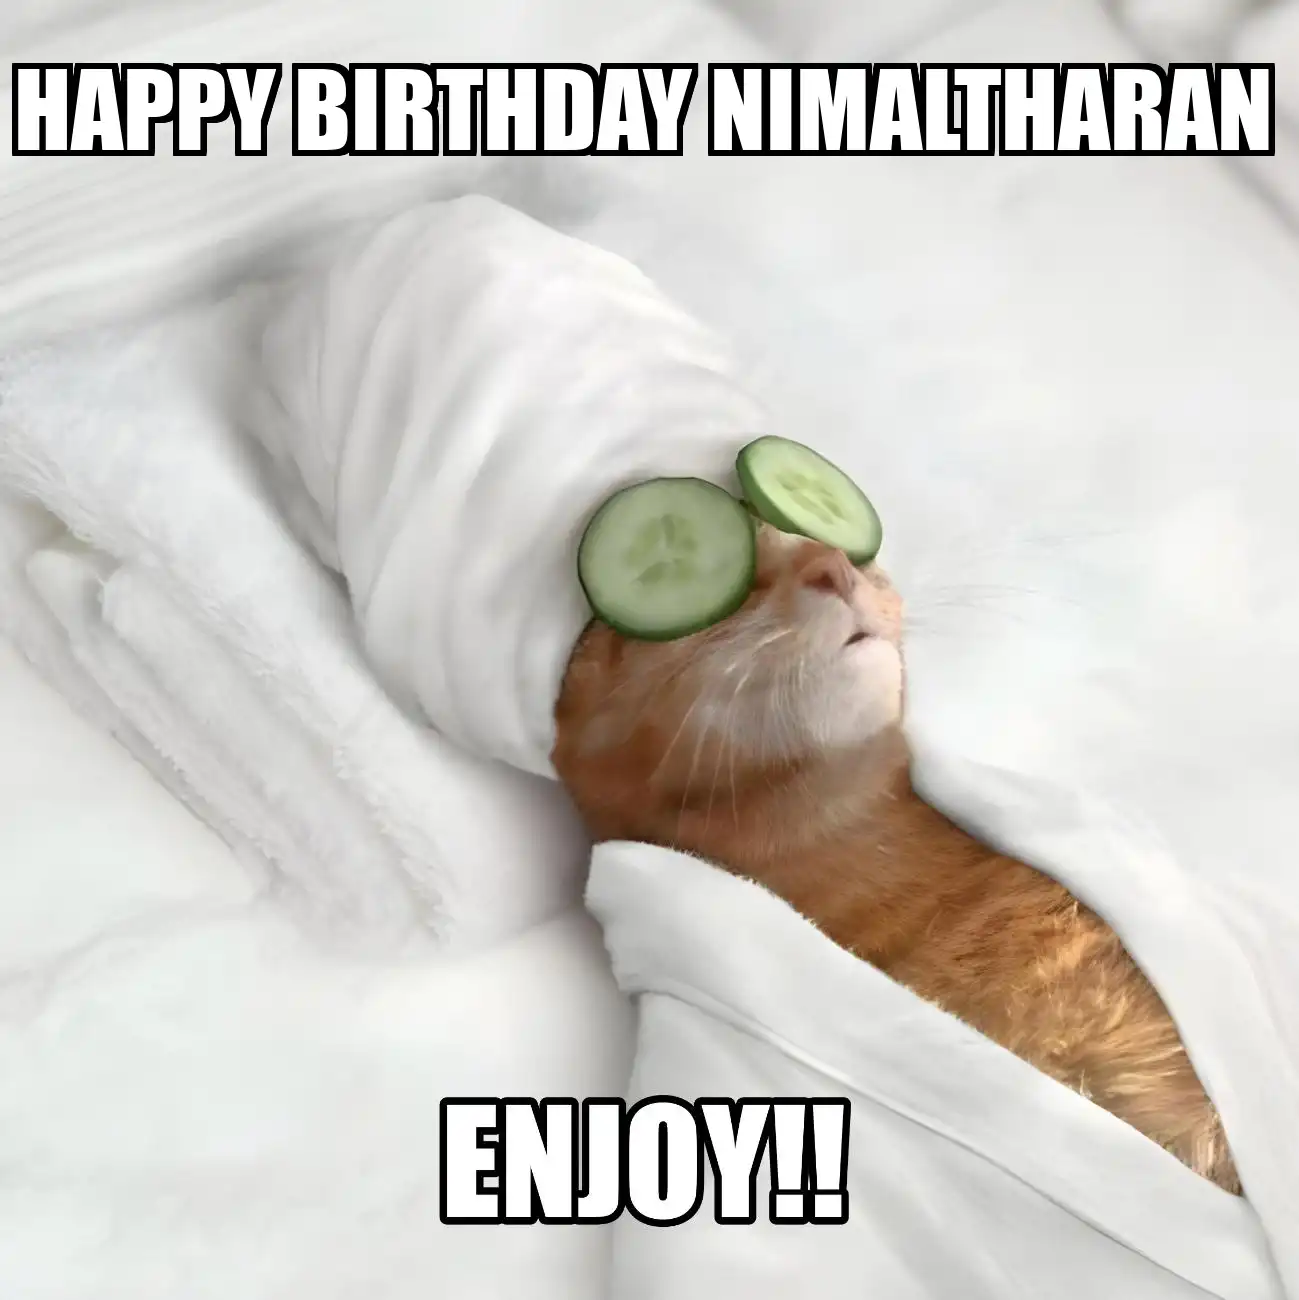 Happy Birthday Nimaltharan Enjoy Cat Meme